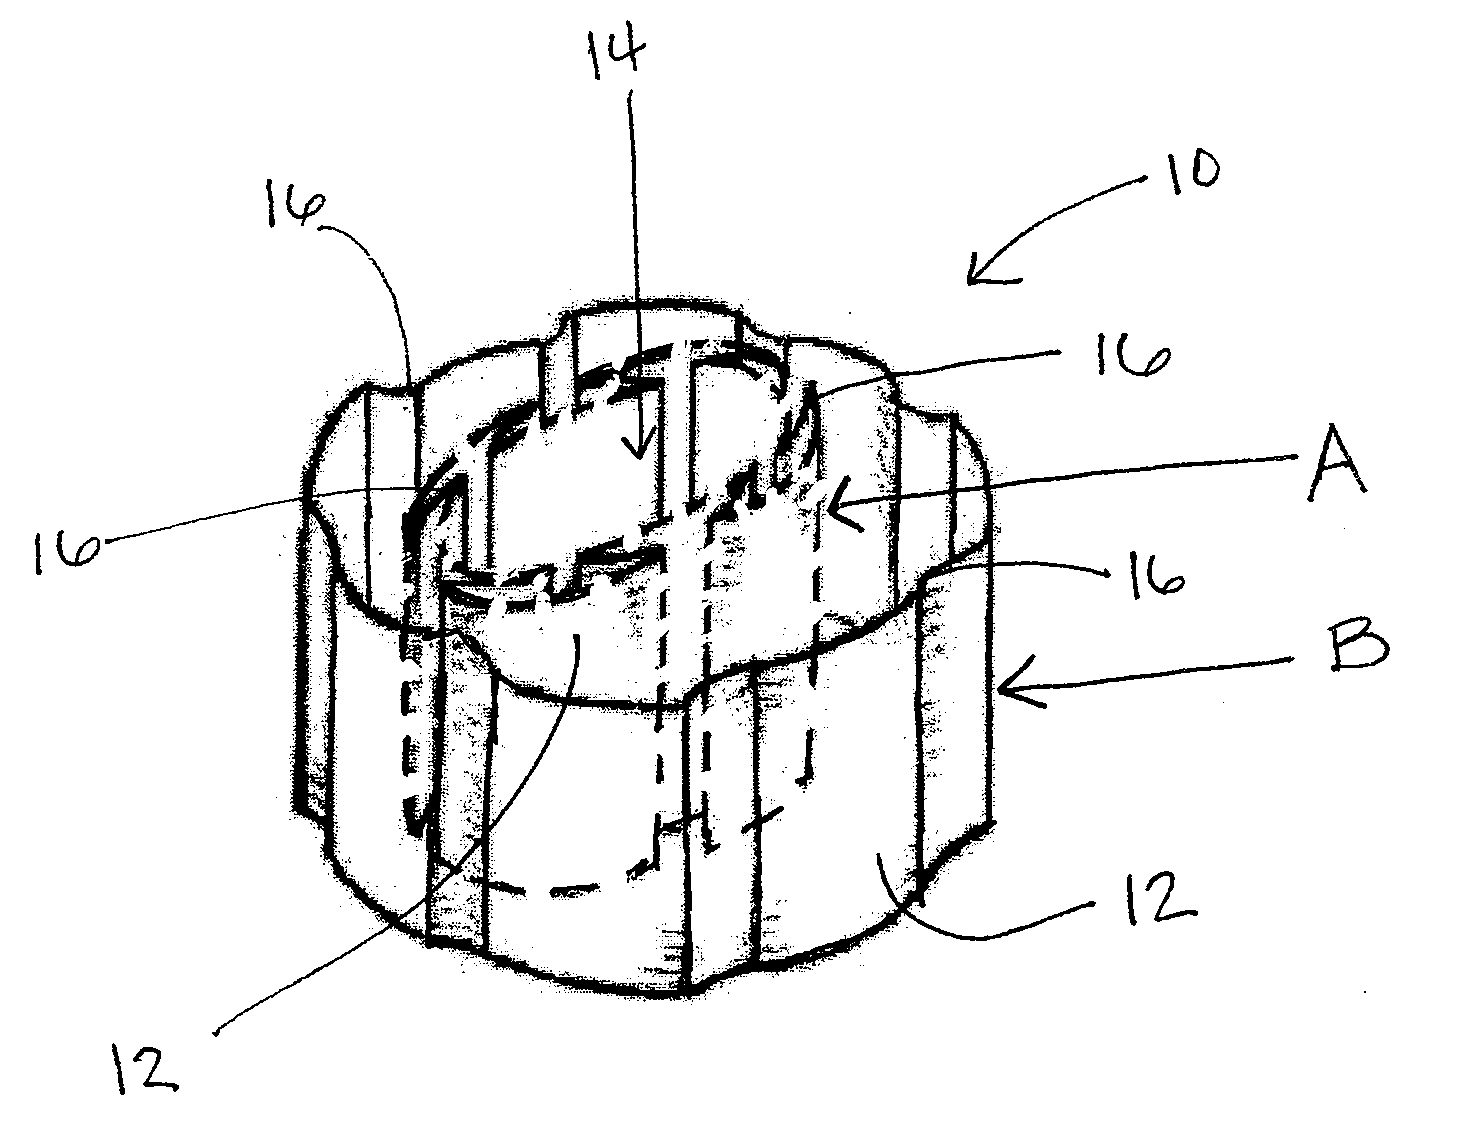 Multi-planar obturator with foldable retractor